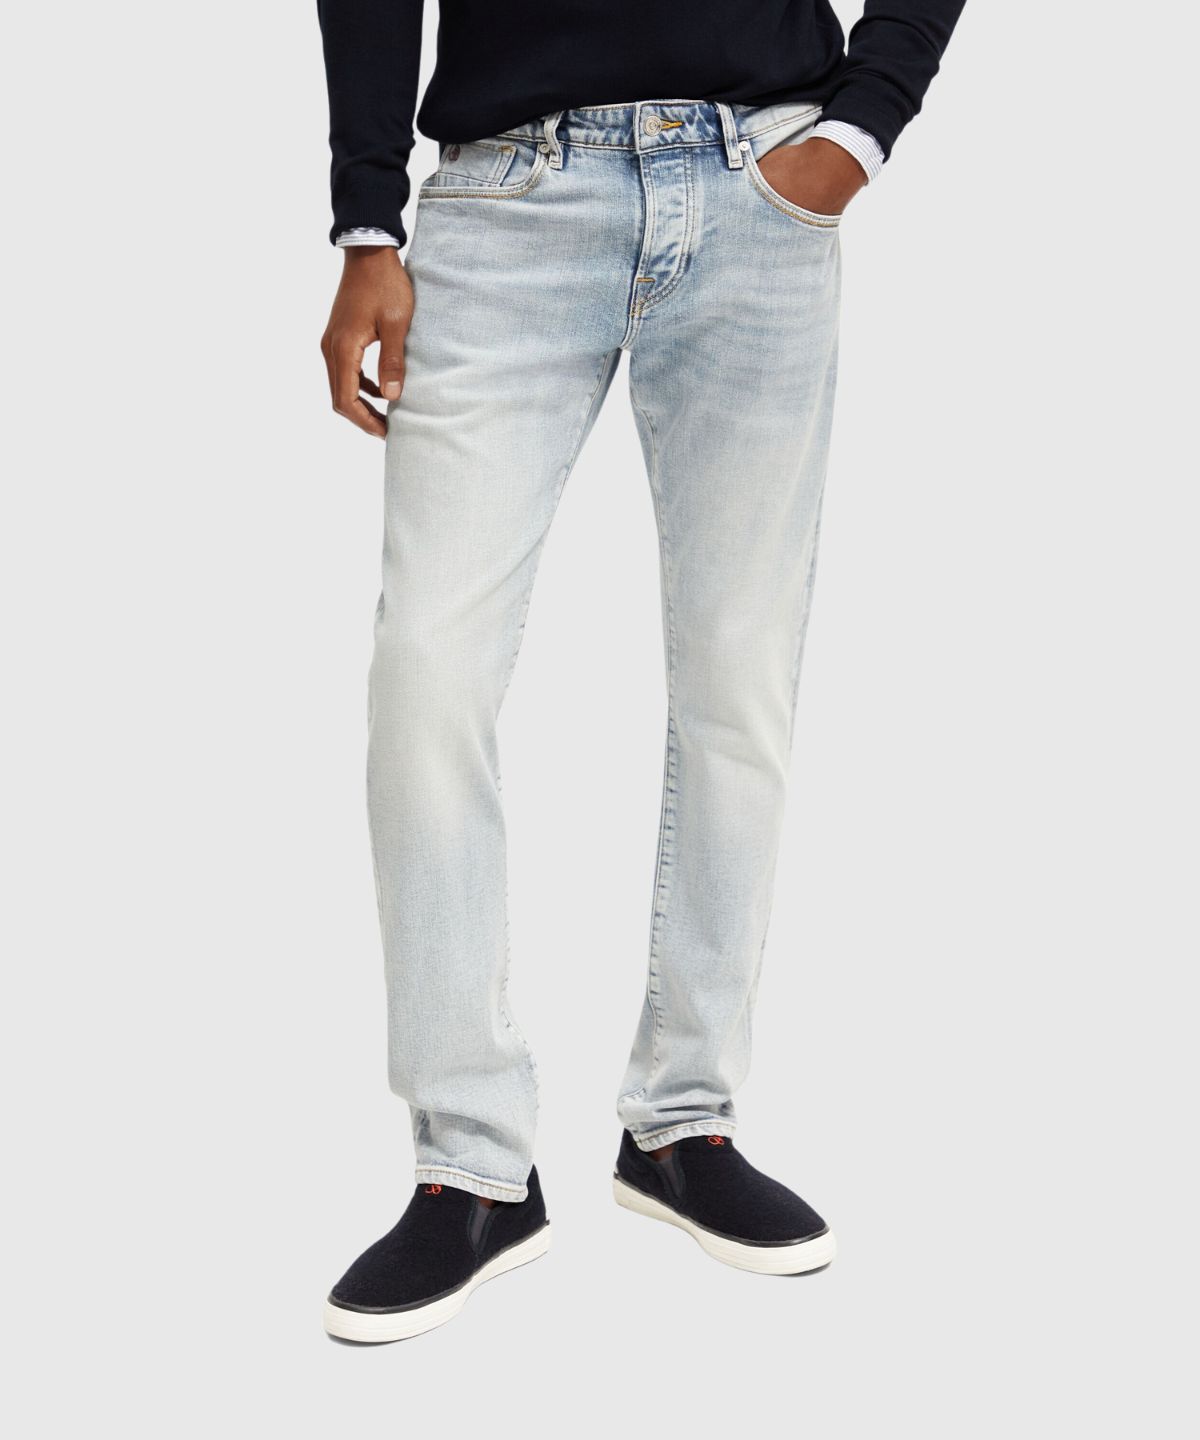 Seasonal Essentials Ralston Slim fit jeans – Take Down